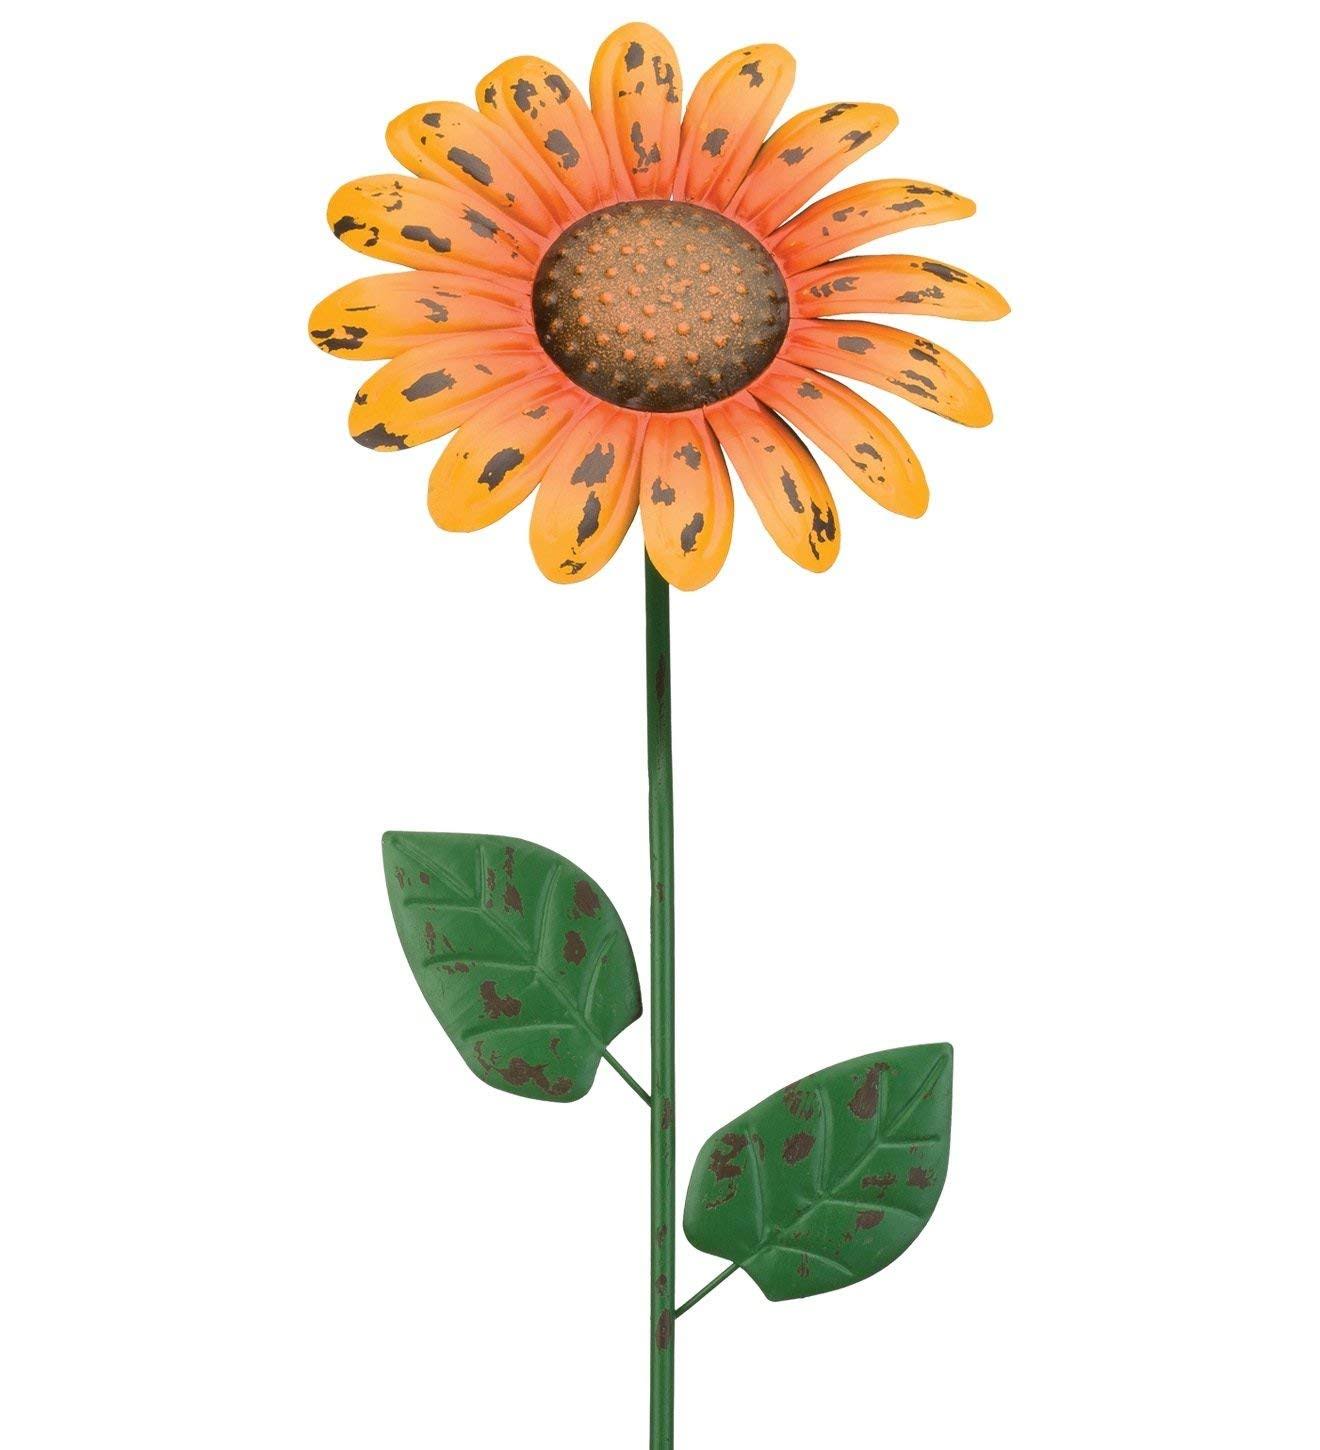 Regal Art & Gift REGAL11624 36 in. Rustic Flower Stake, Daisy